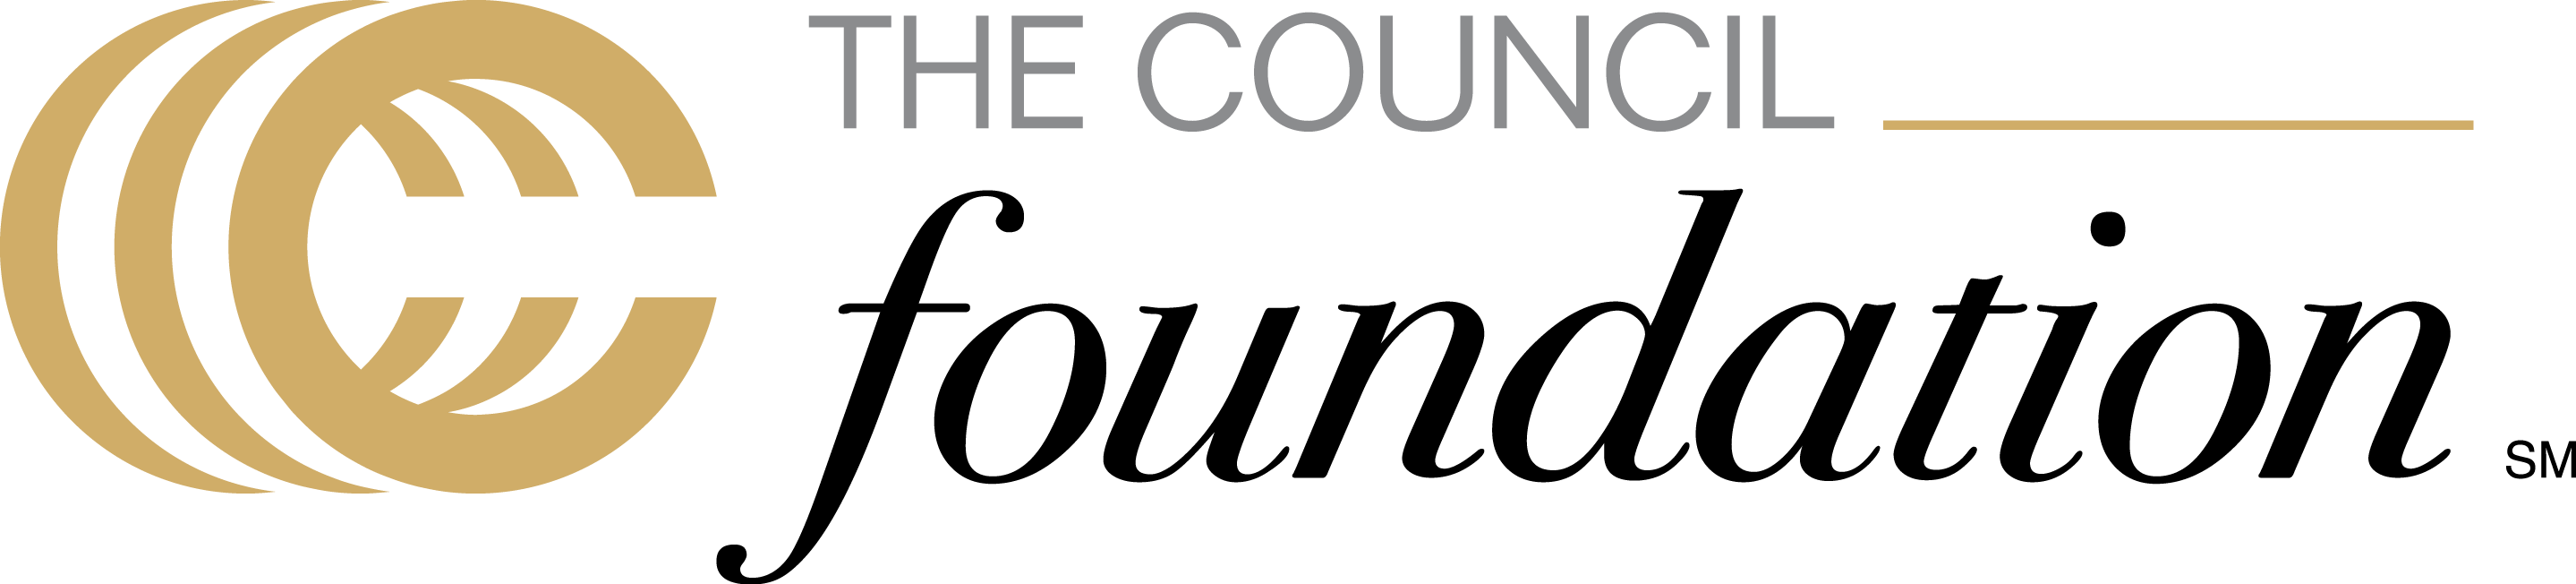 Council Foundation Logo